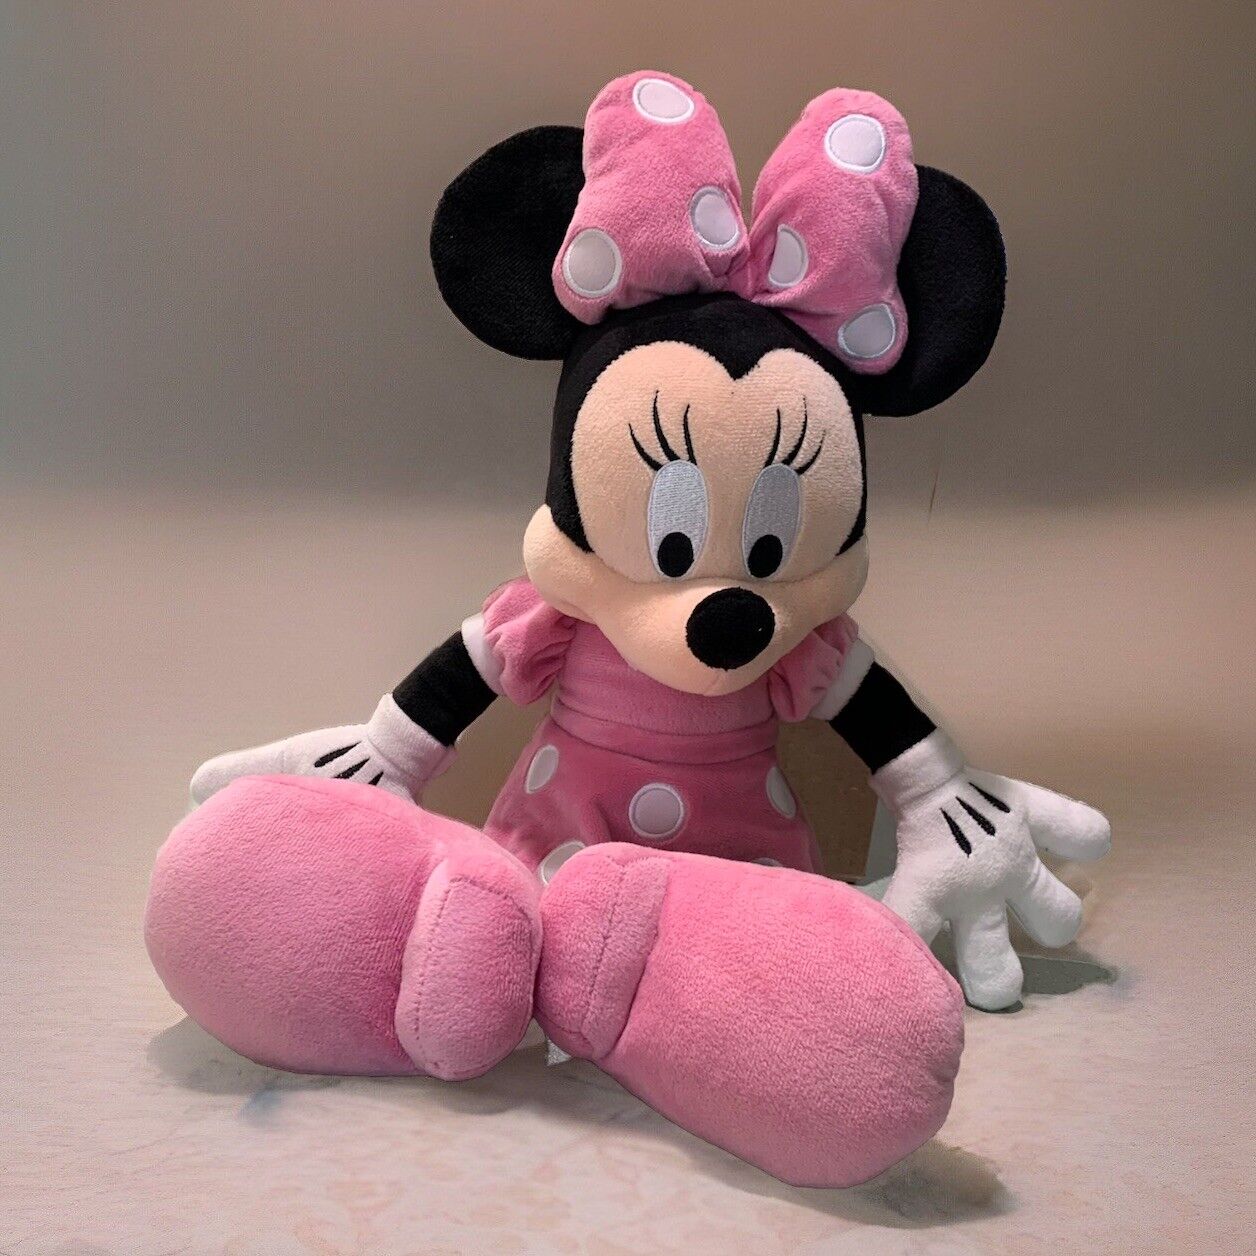 Disney MINNIE MOUSE Plush Pink Polka Dot Dress Stuffed Animal Toy Doll 15\